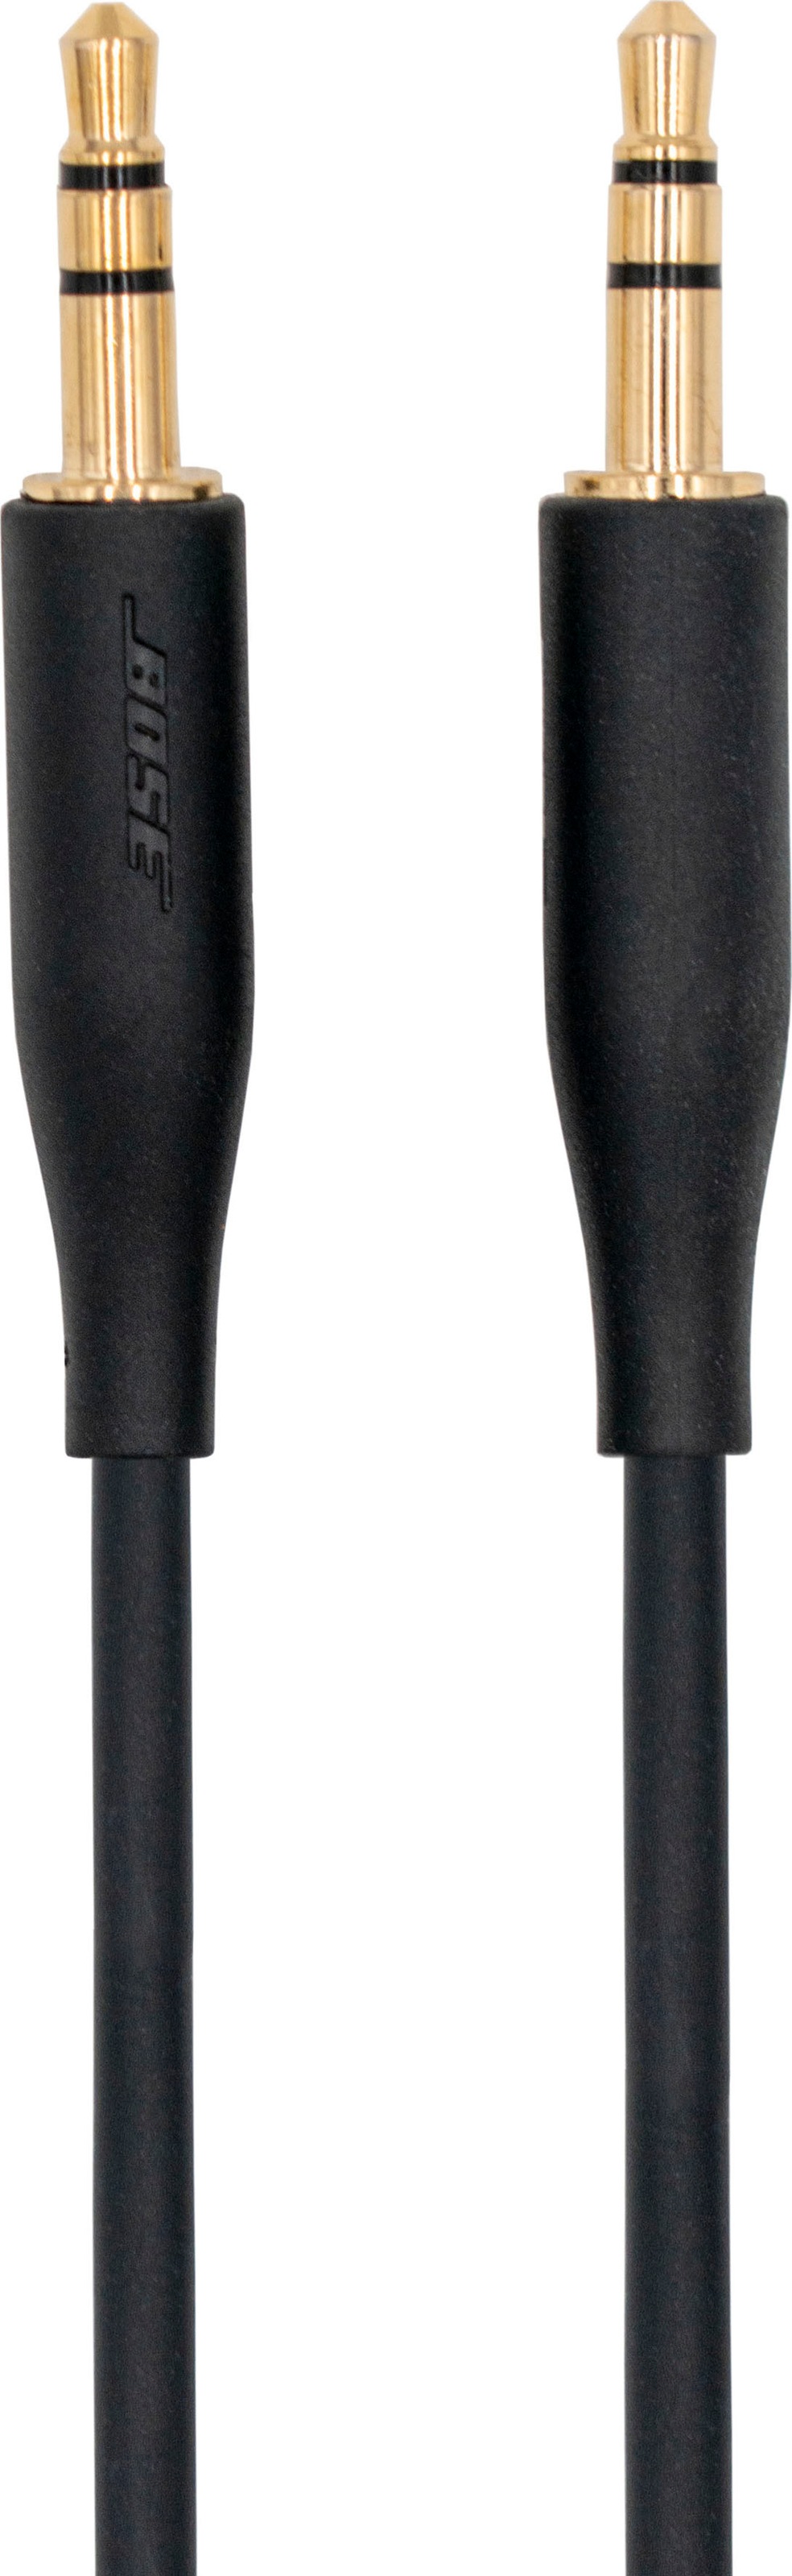 Bose Audio-Kabel »Bass Module Connection«, 3,5-mm-Klinke, 3,5-mm-Klinke, 460 cm, passend für Bose TV Speaker